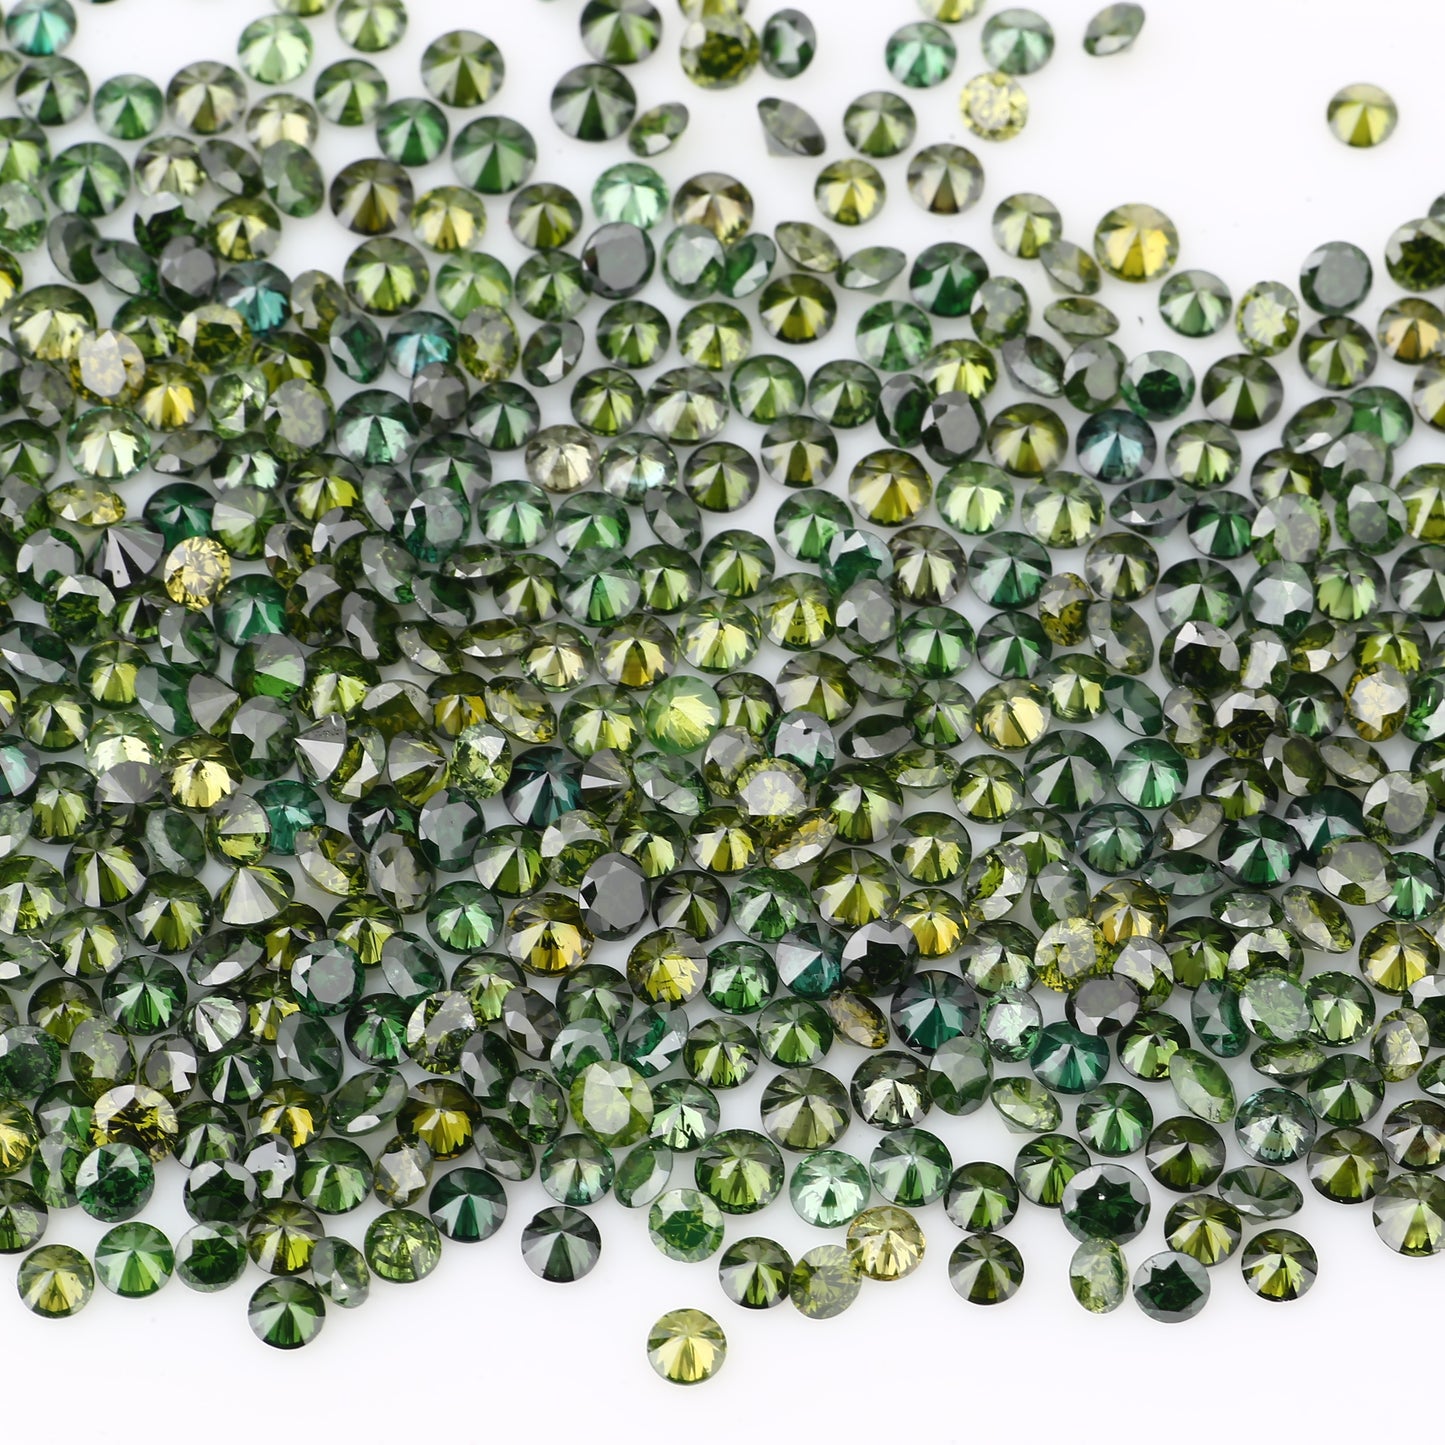 FANCY GREEN DIAMOND FOR ROUND BRILLIANT CUT DIAMOND RING